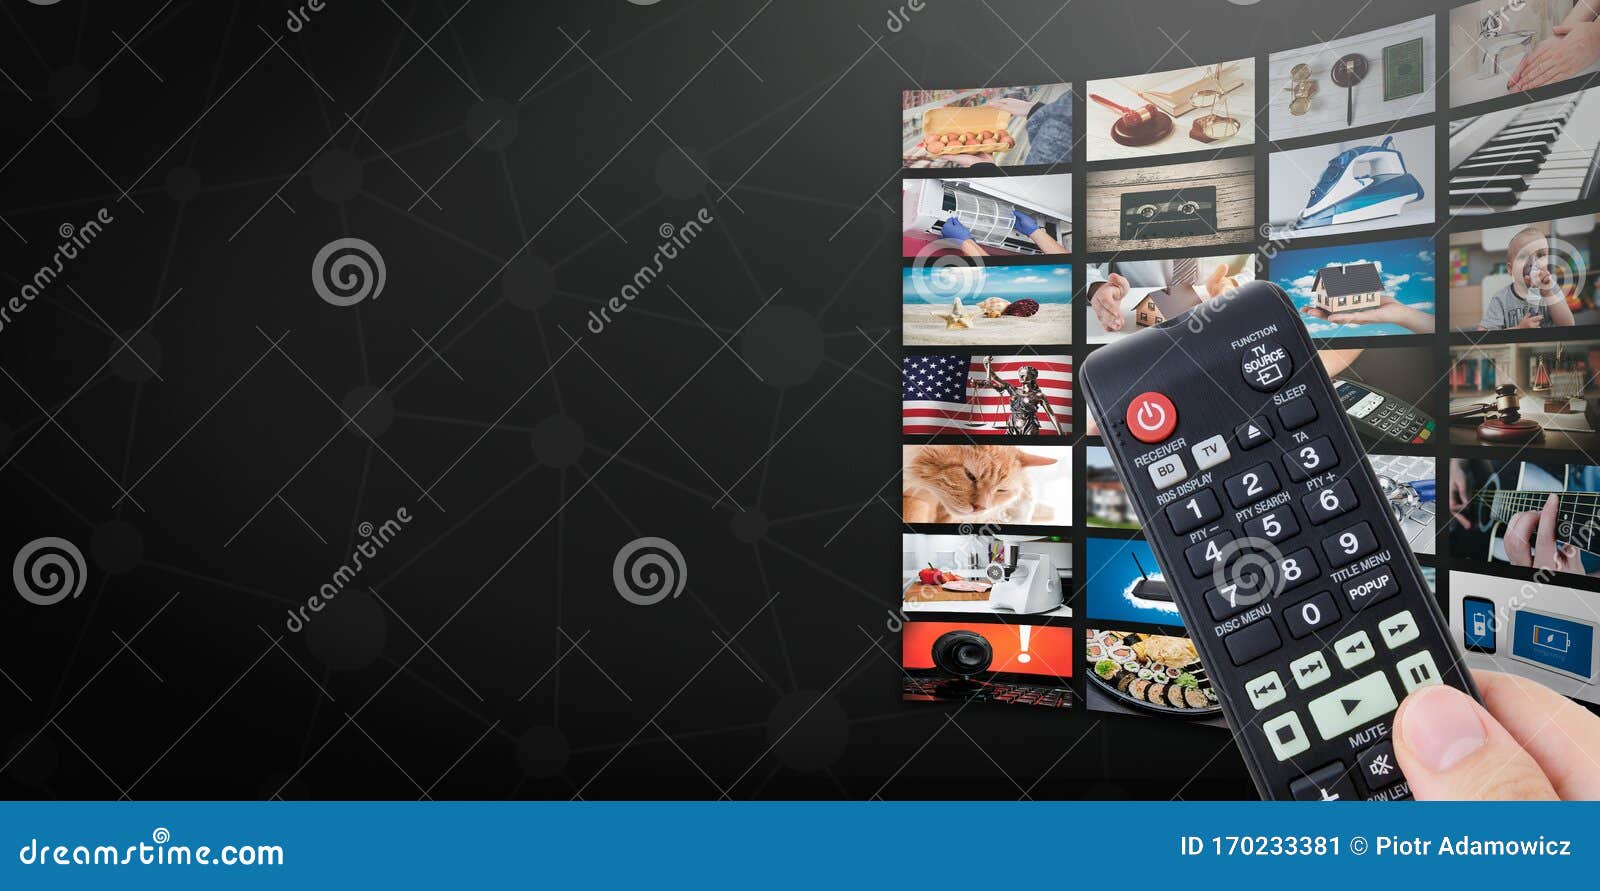 TV Streaming Service, VOD Service Web Background Stock Image